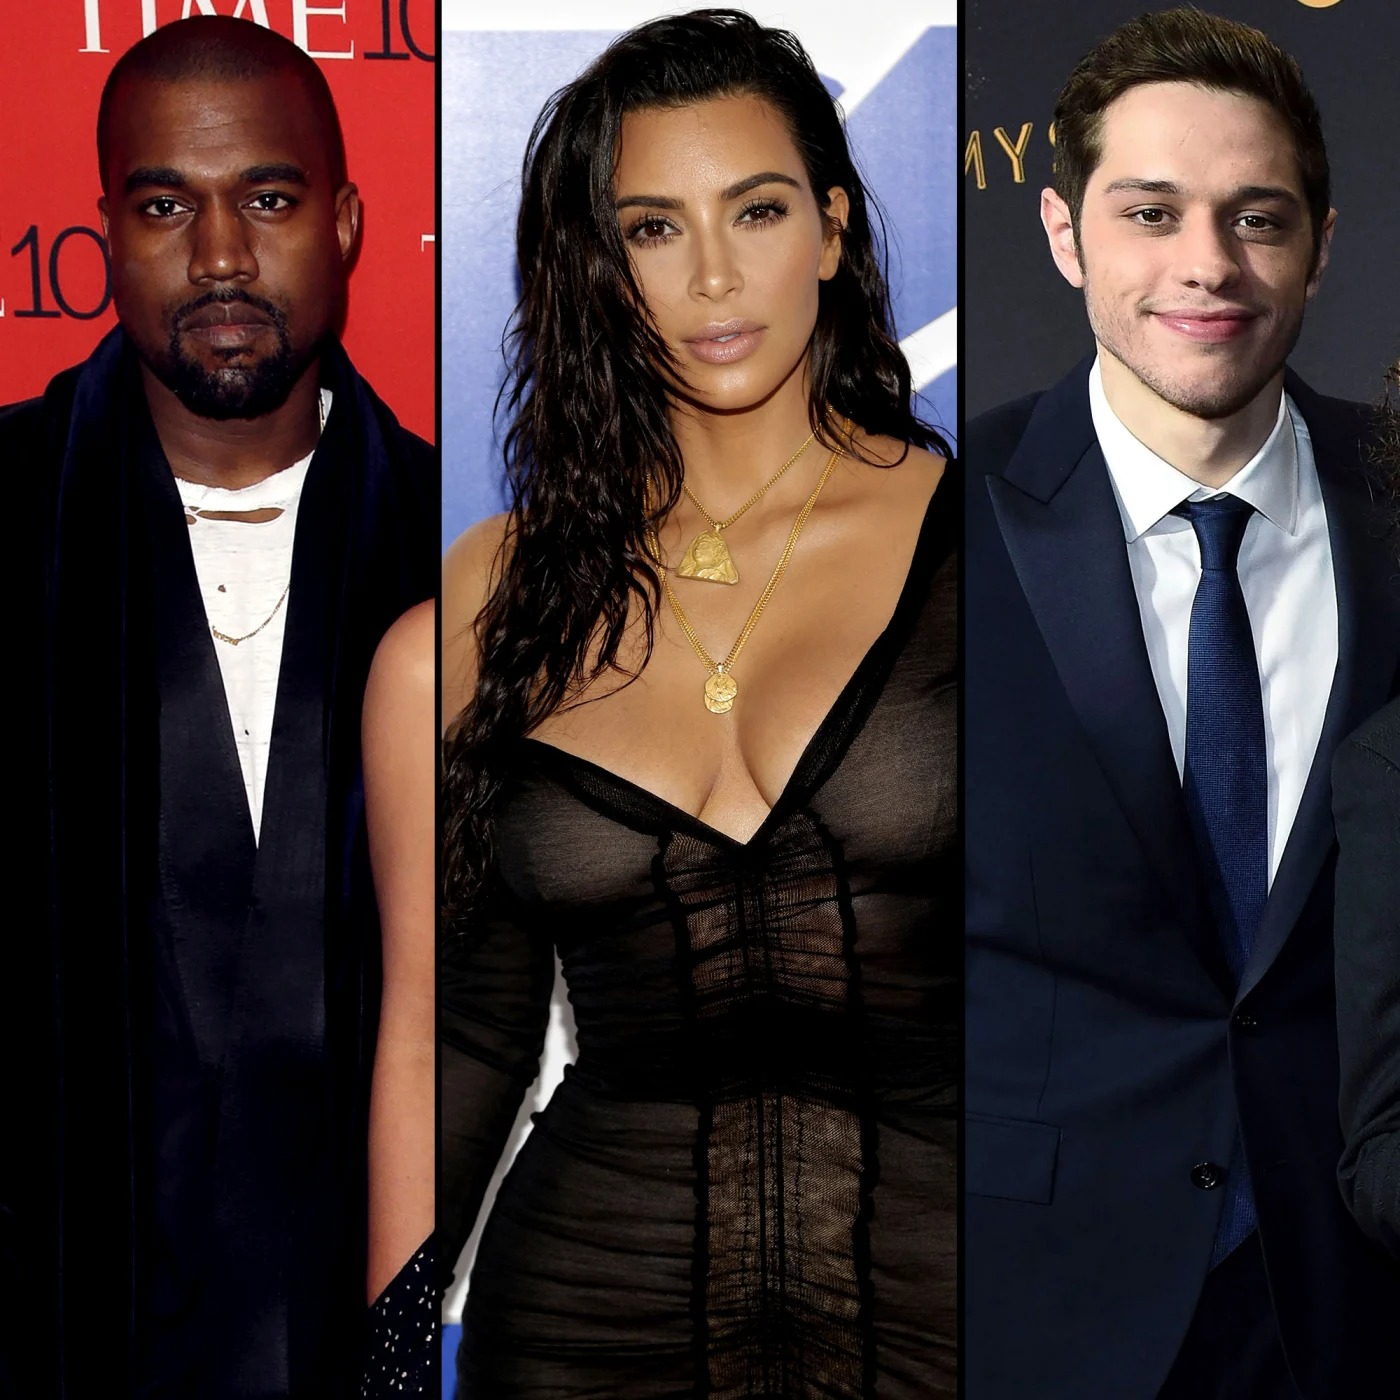 Kim Kardashian Porn Captions Rule 34 - Kanye West Claims Pete Davidson Was a 'Pawn' to 'Antagonize' Him